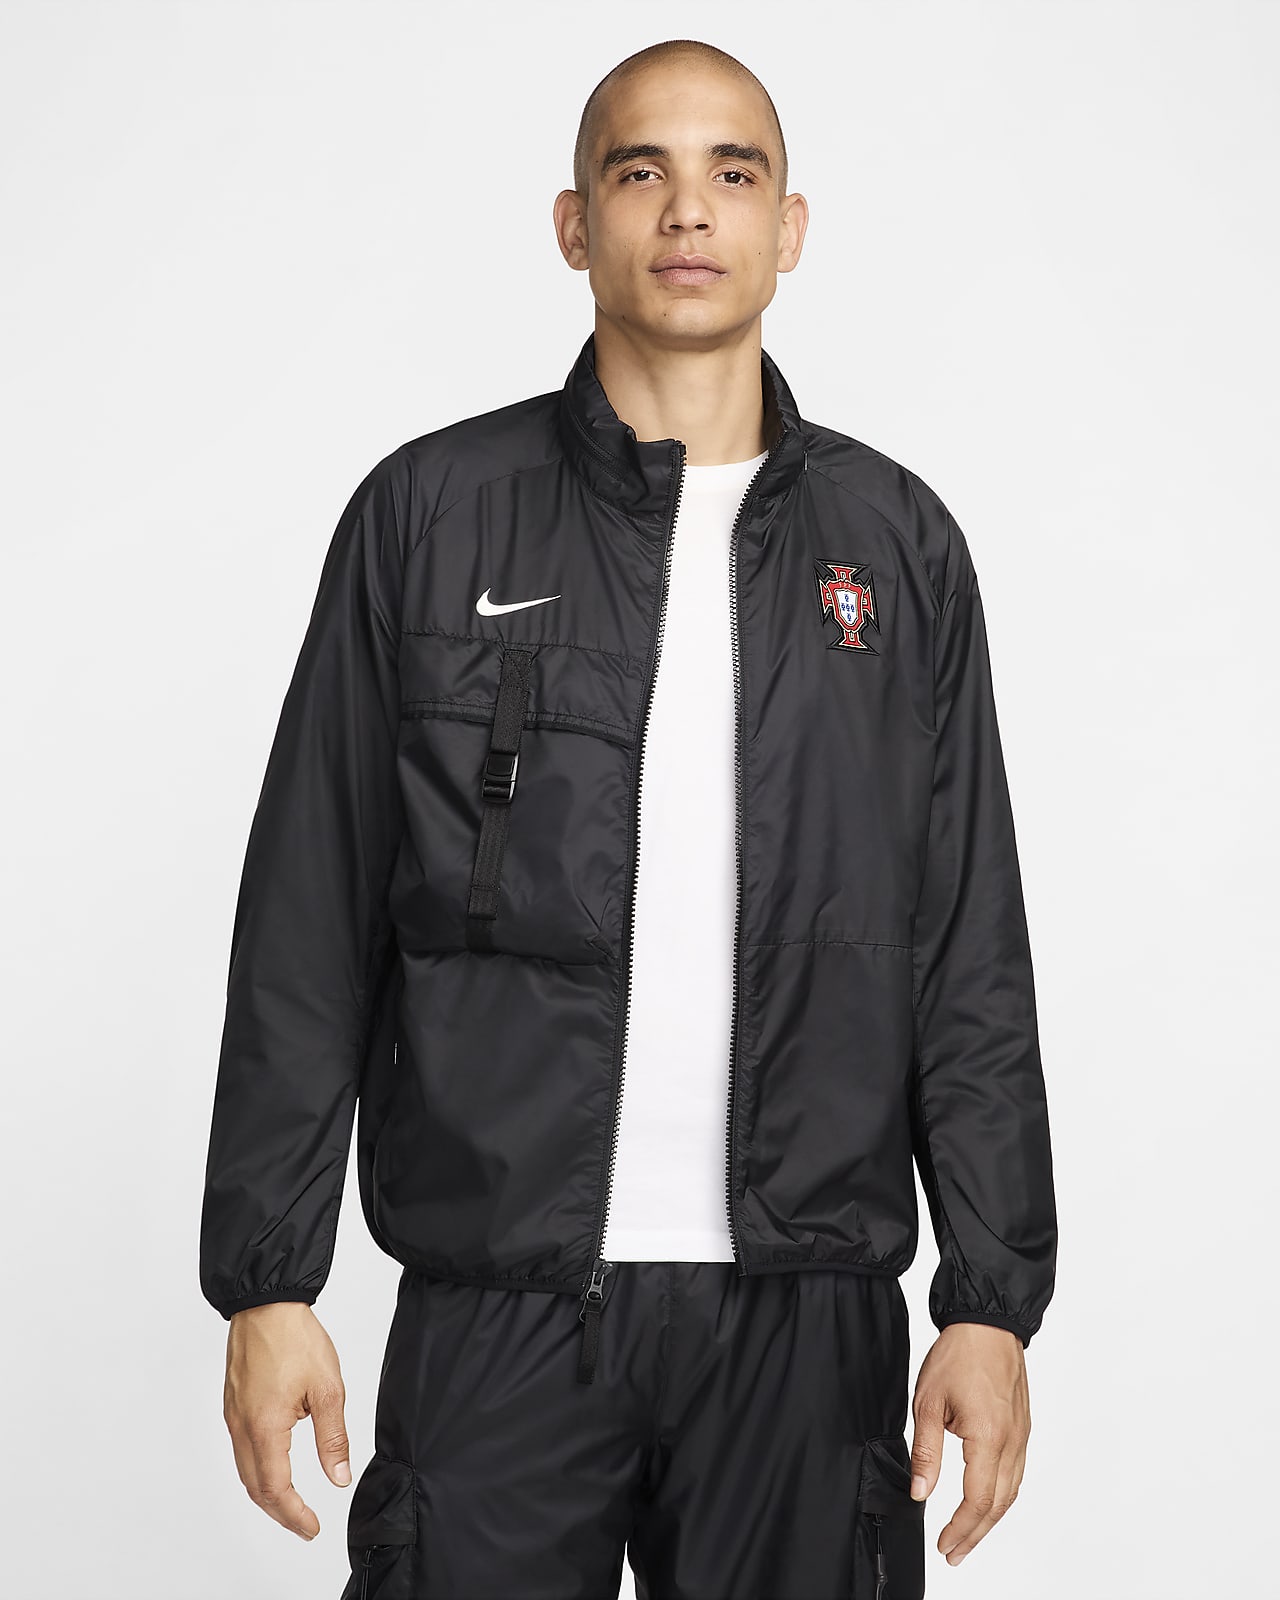 Portugal Men's Nike Football Jacket